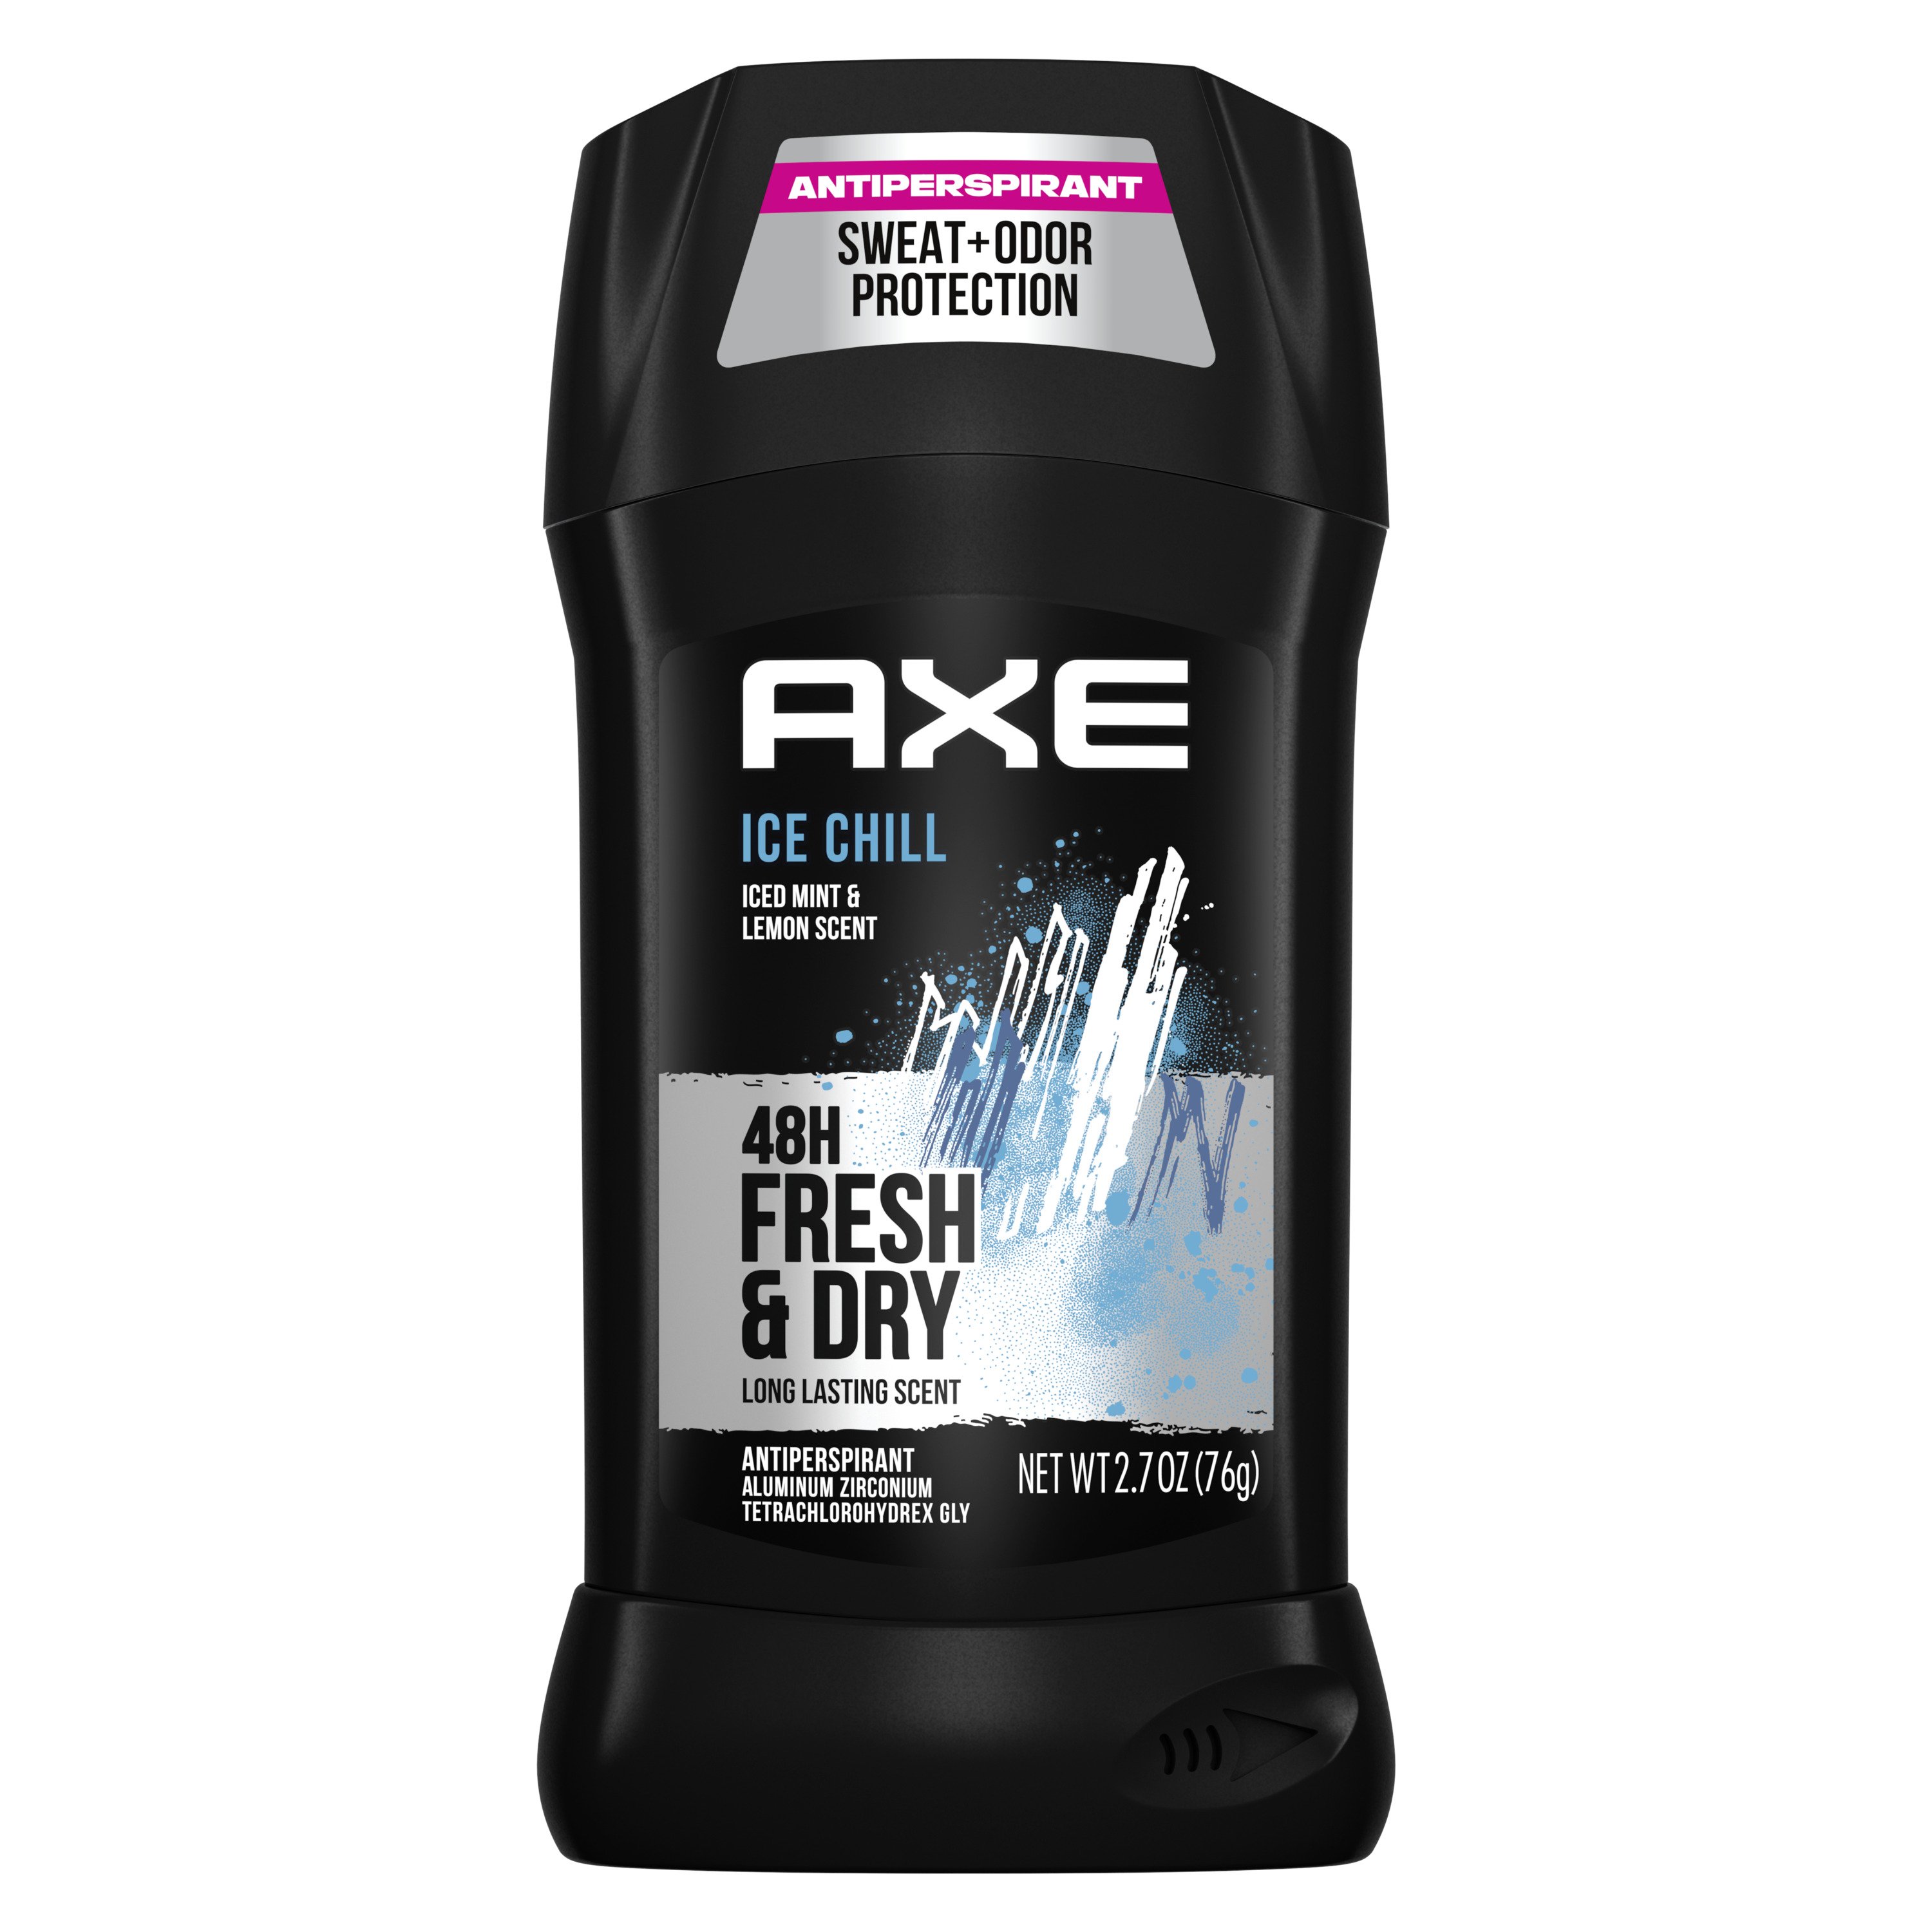 AXE Ice Chill Antiperspirant Deodorant Stick - Shop Deodorant ...